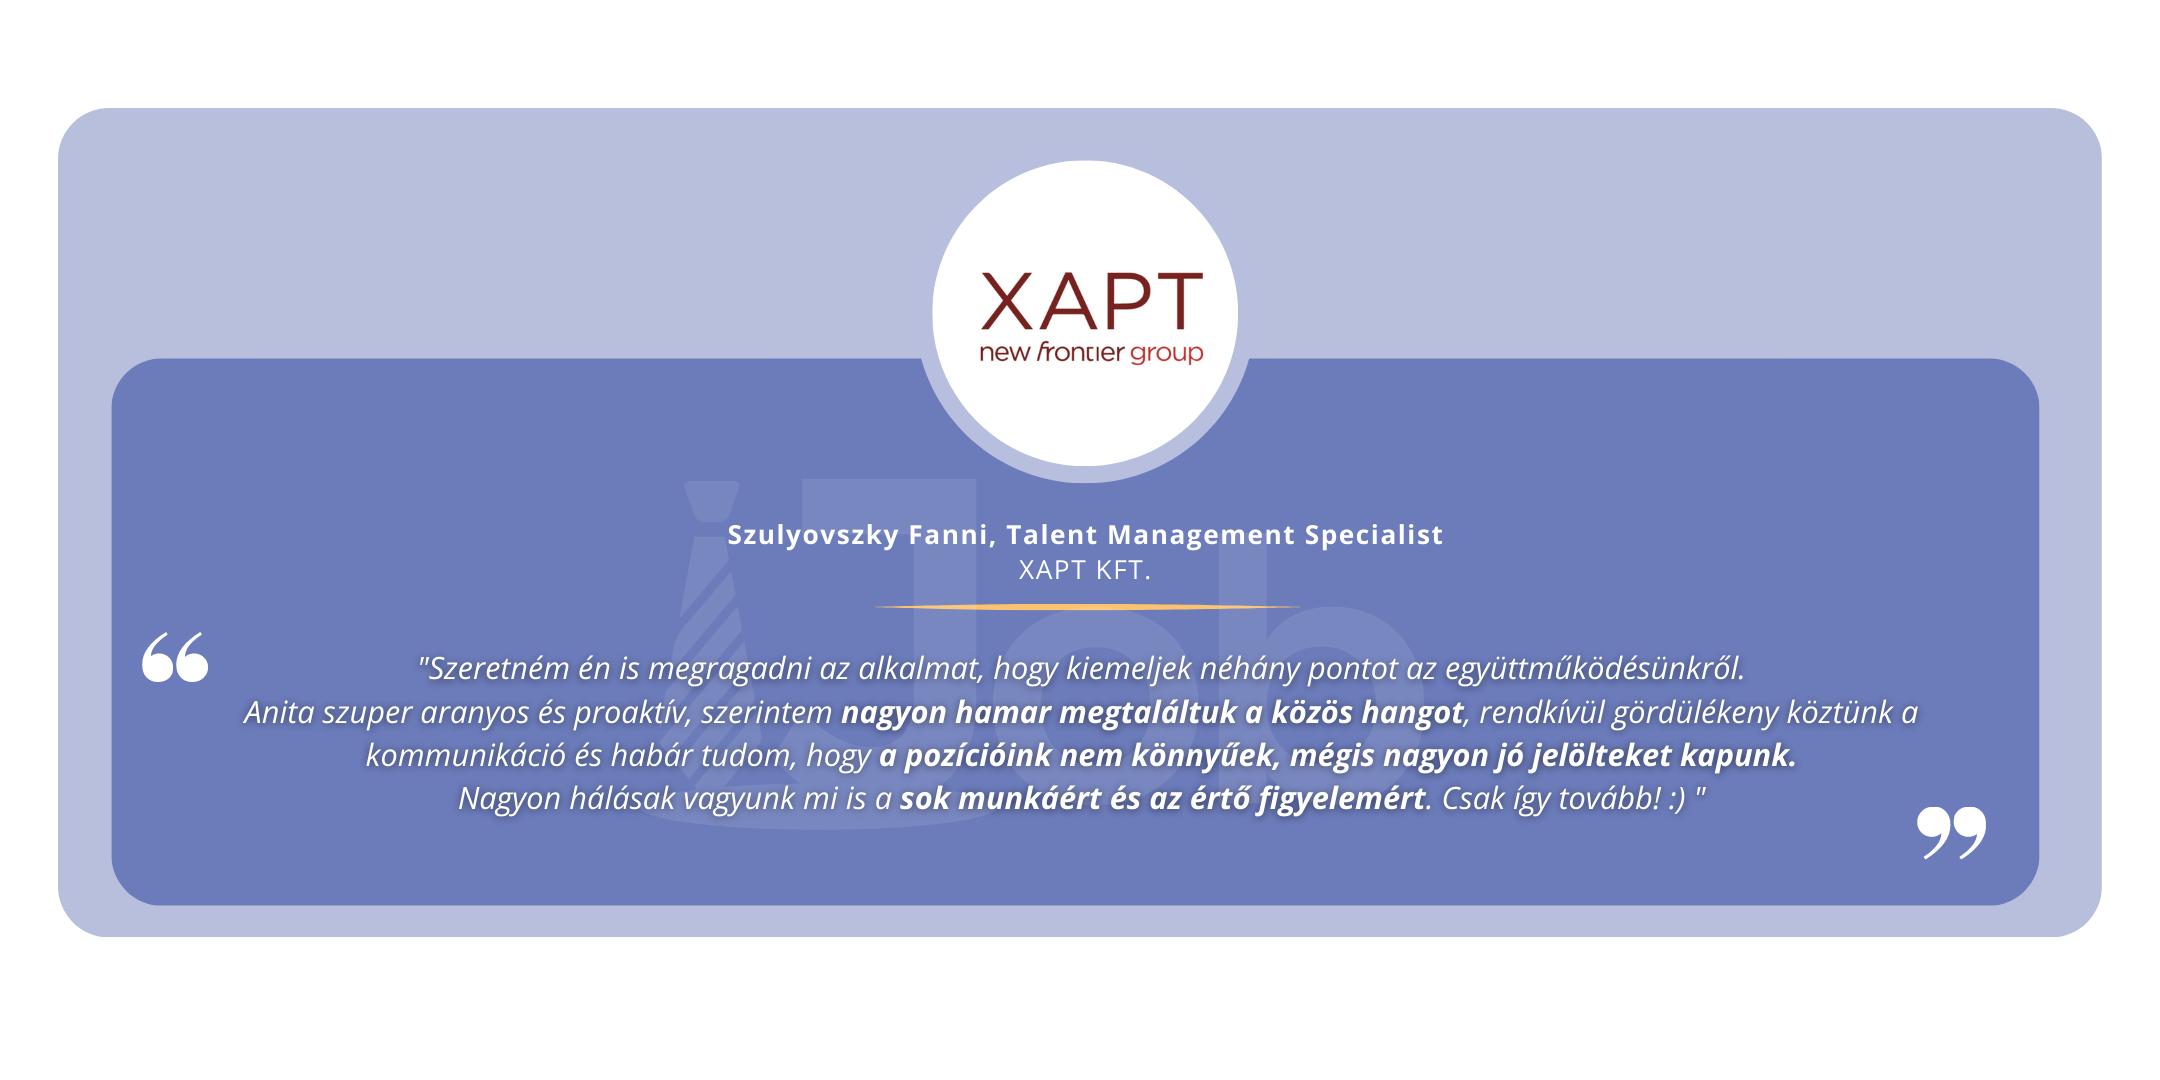 Szulyovszki Fanni, Talent Management Specialist XAPT KFt.